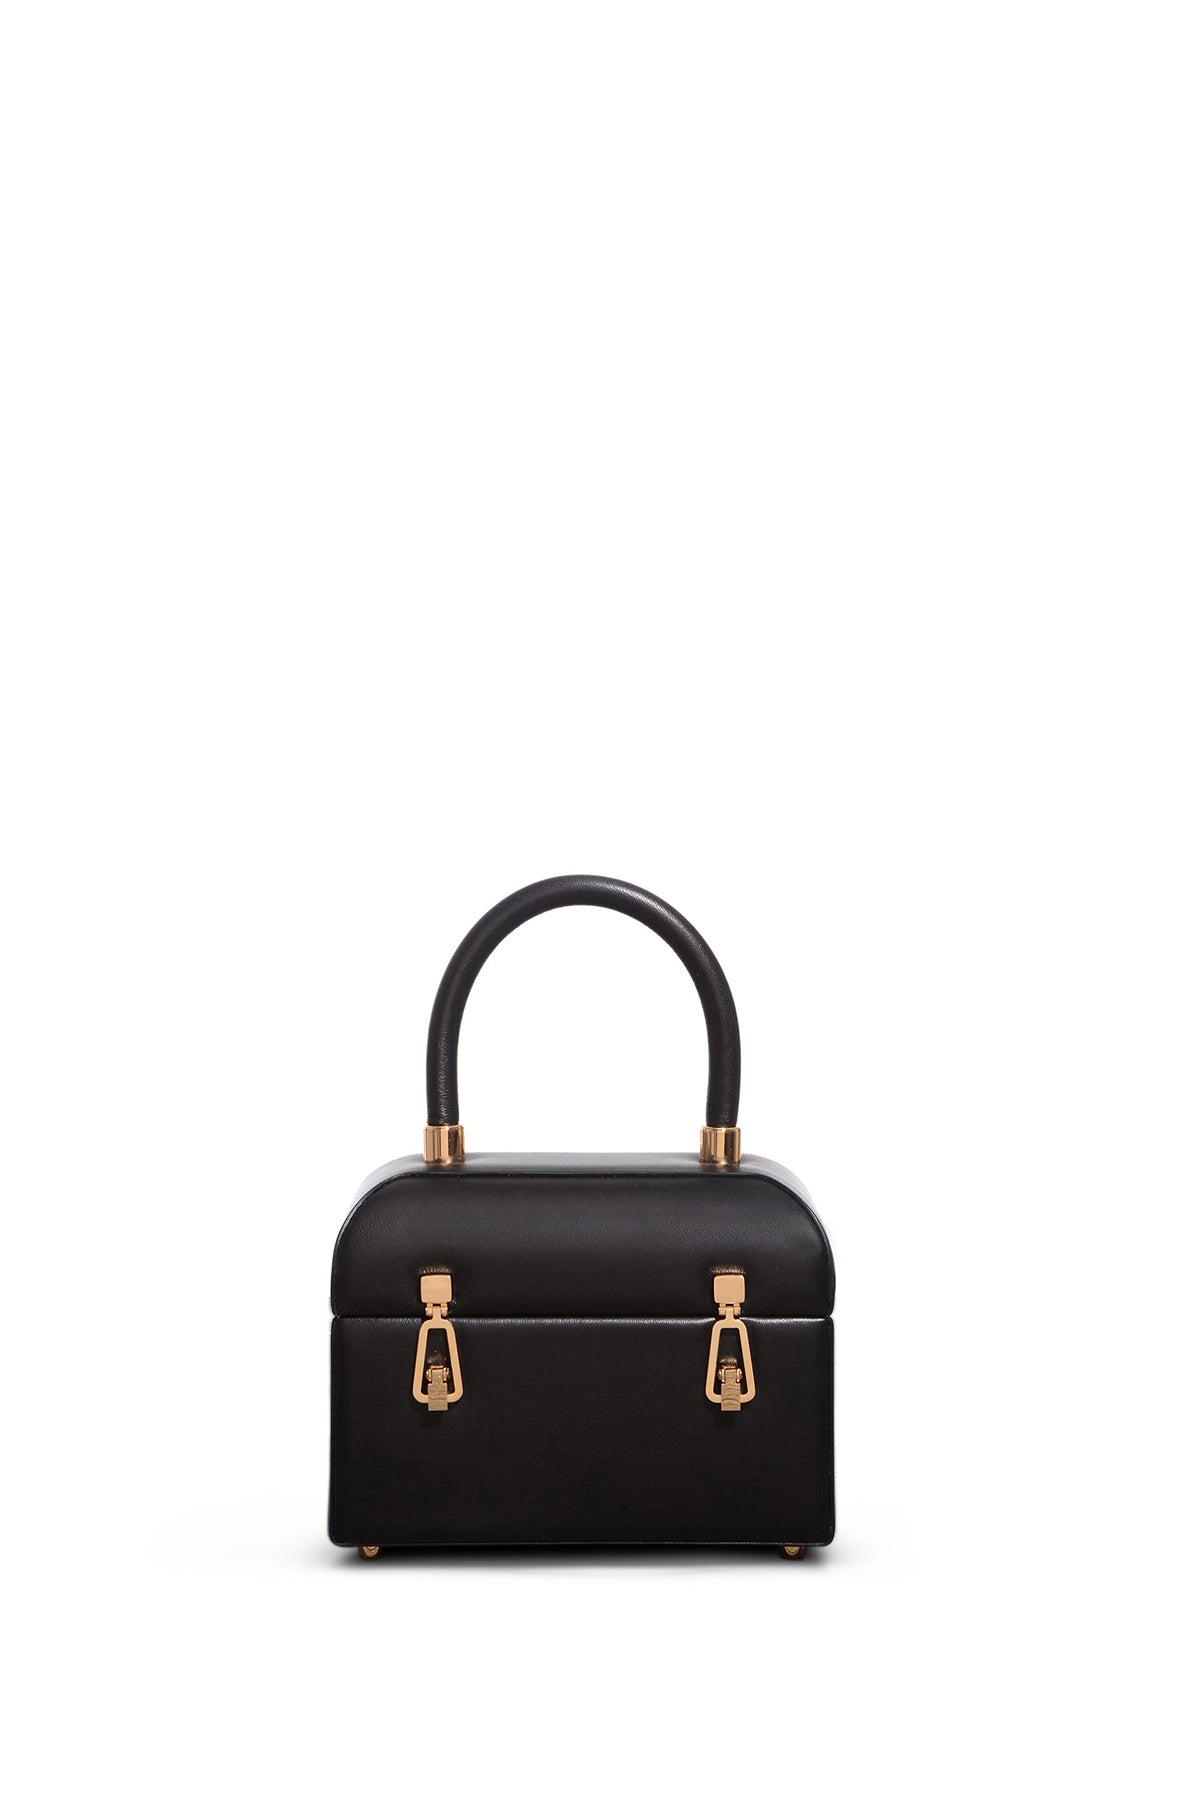 Patsy Bag in Black Nappa Leather